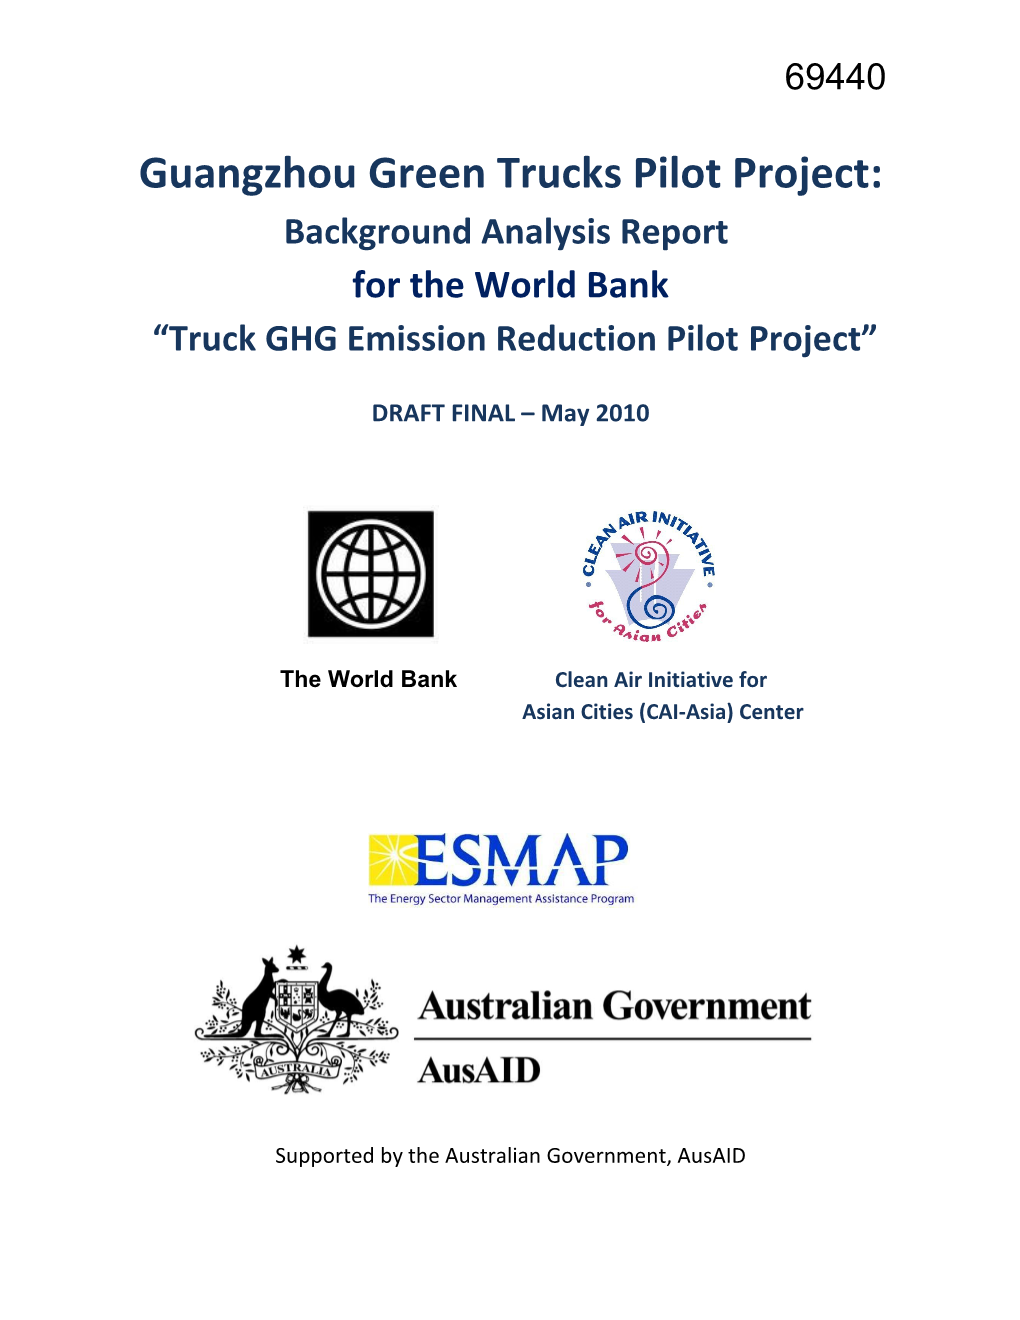 Guangzhou Green Trucks Pilot Project Analysis Report Draft Final